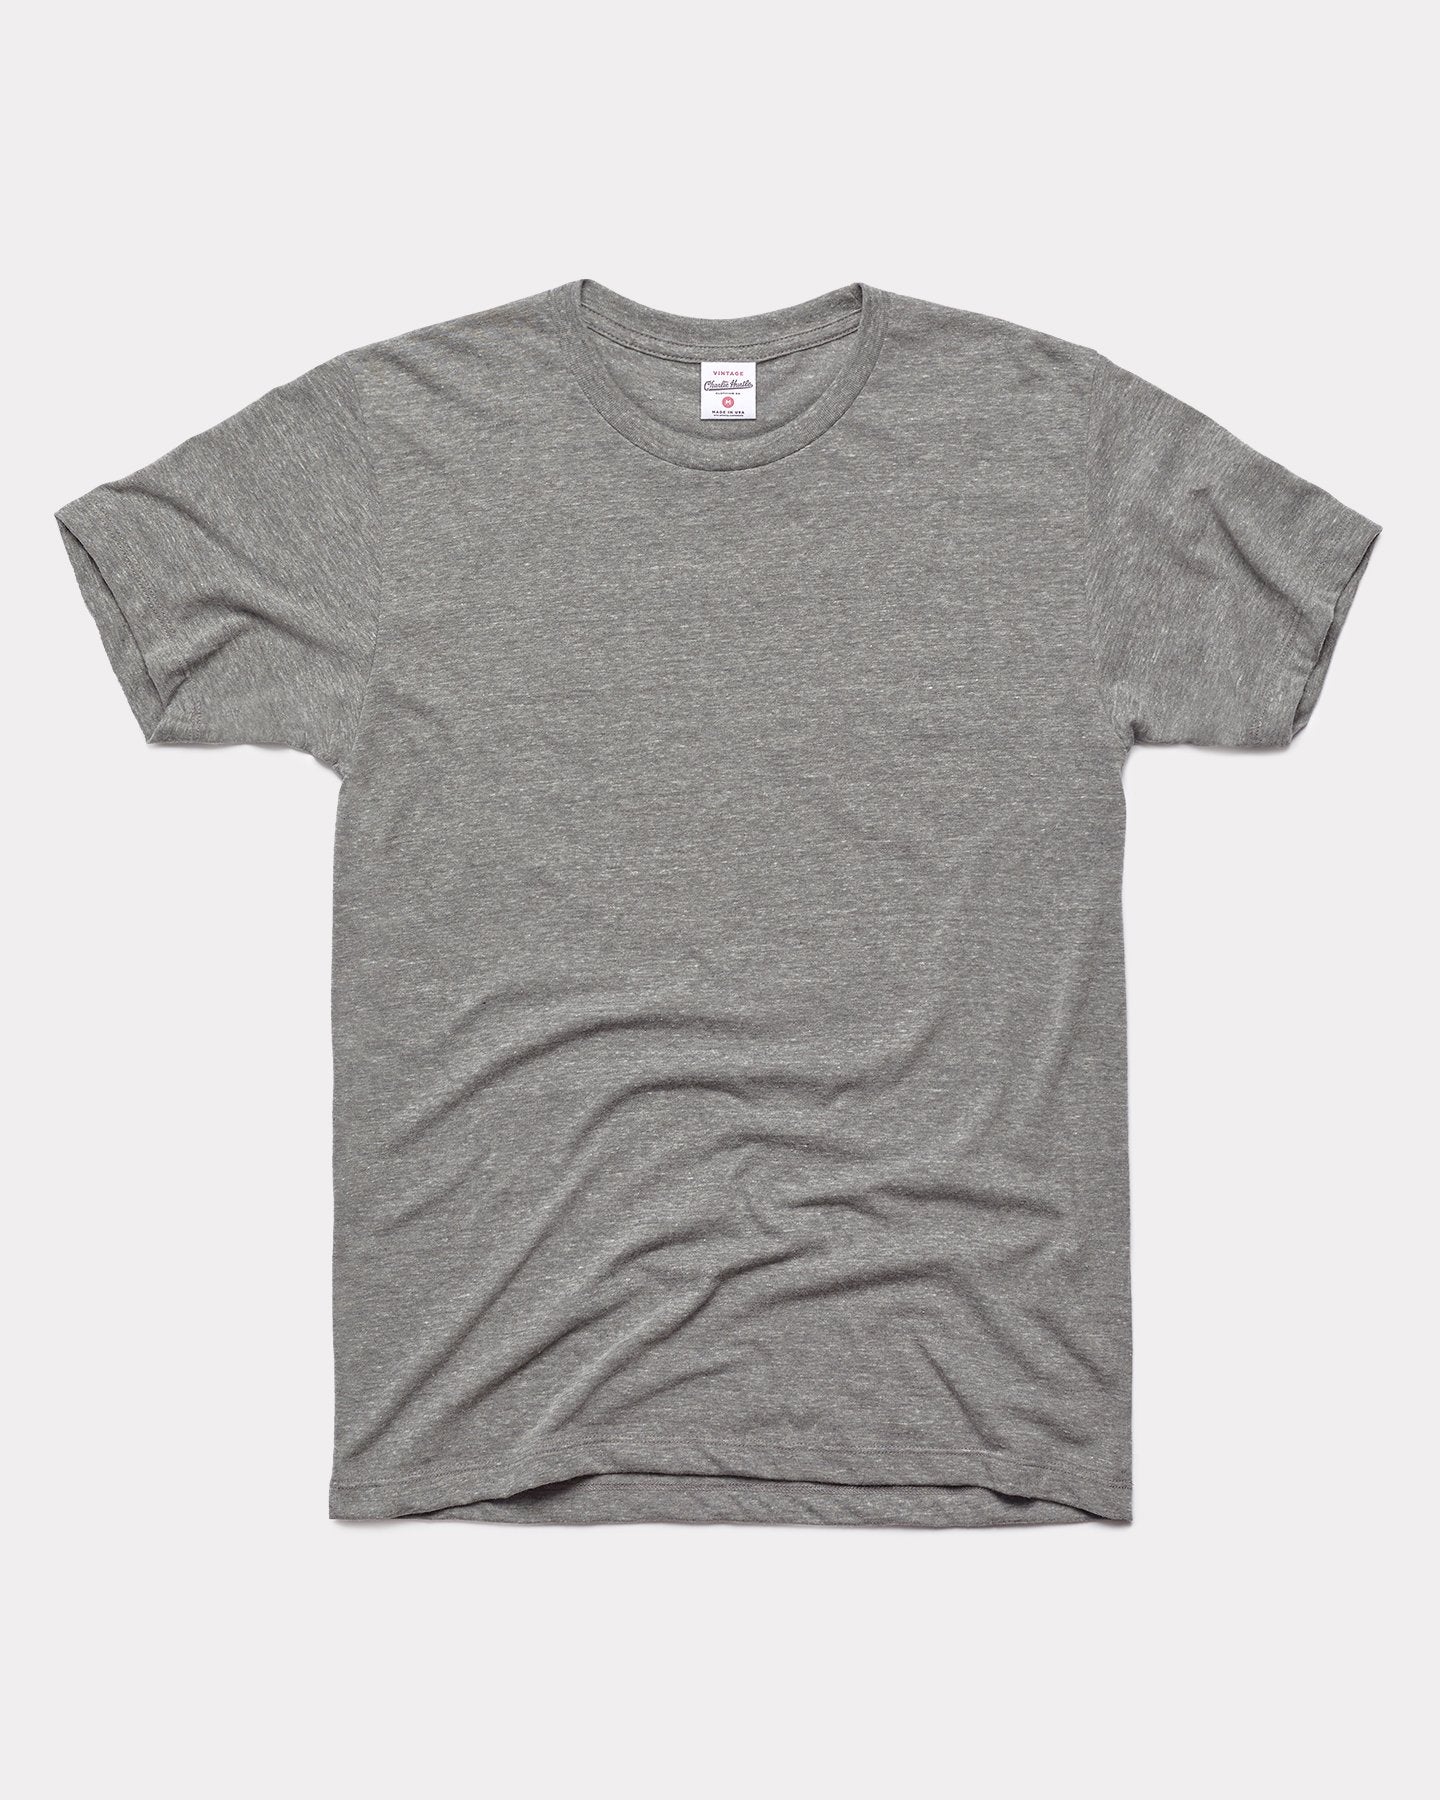 Charlie Hustle Big League Dad T-Shirt - Men's T-Shirts in Vintage Grey